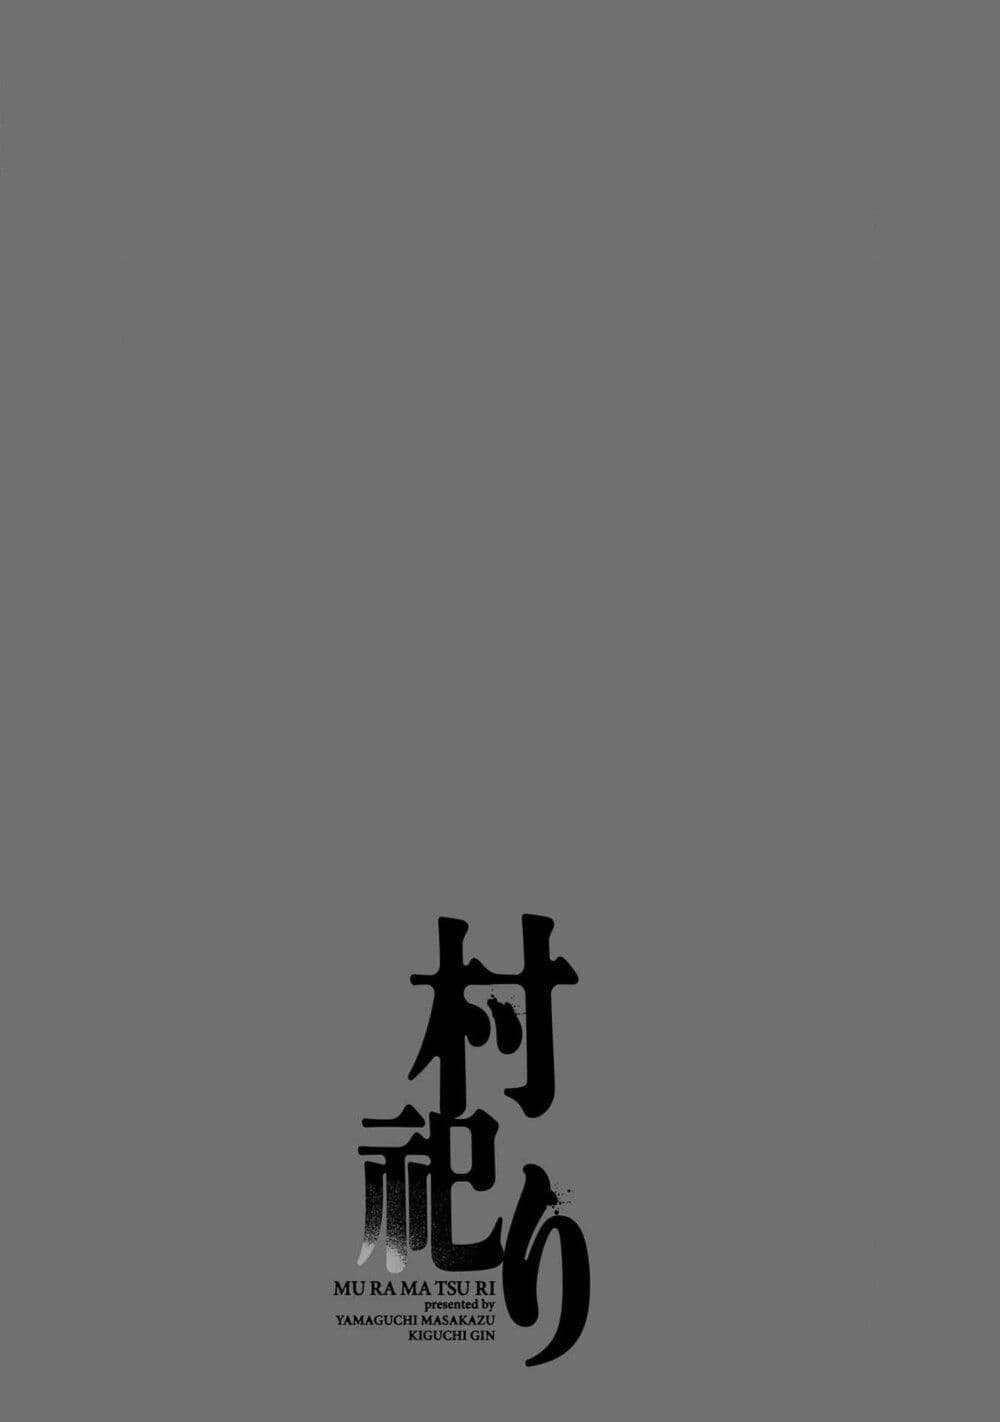 Mura Matsuri 19.29 (21)